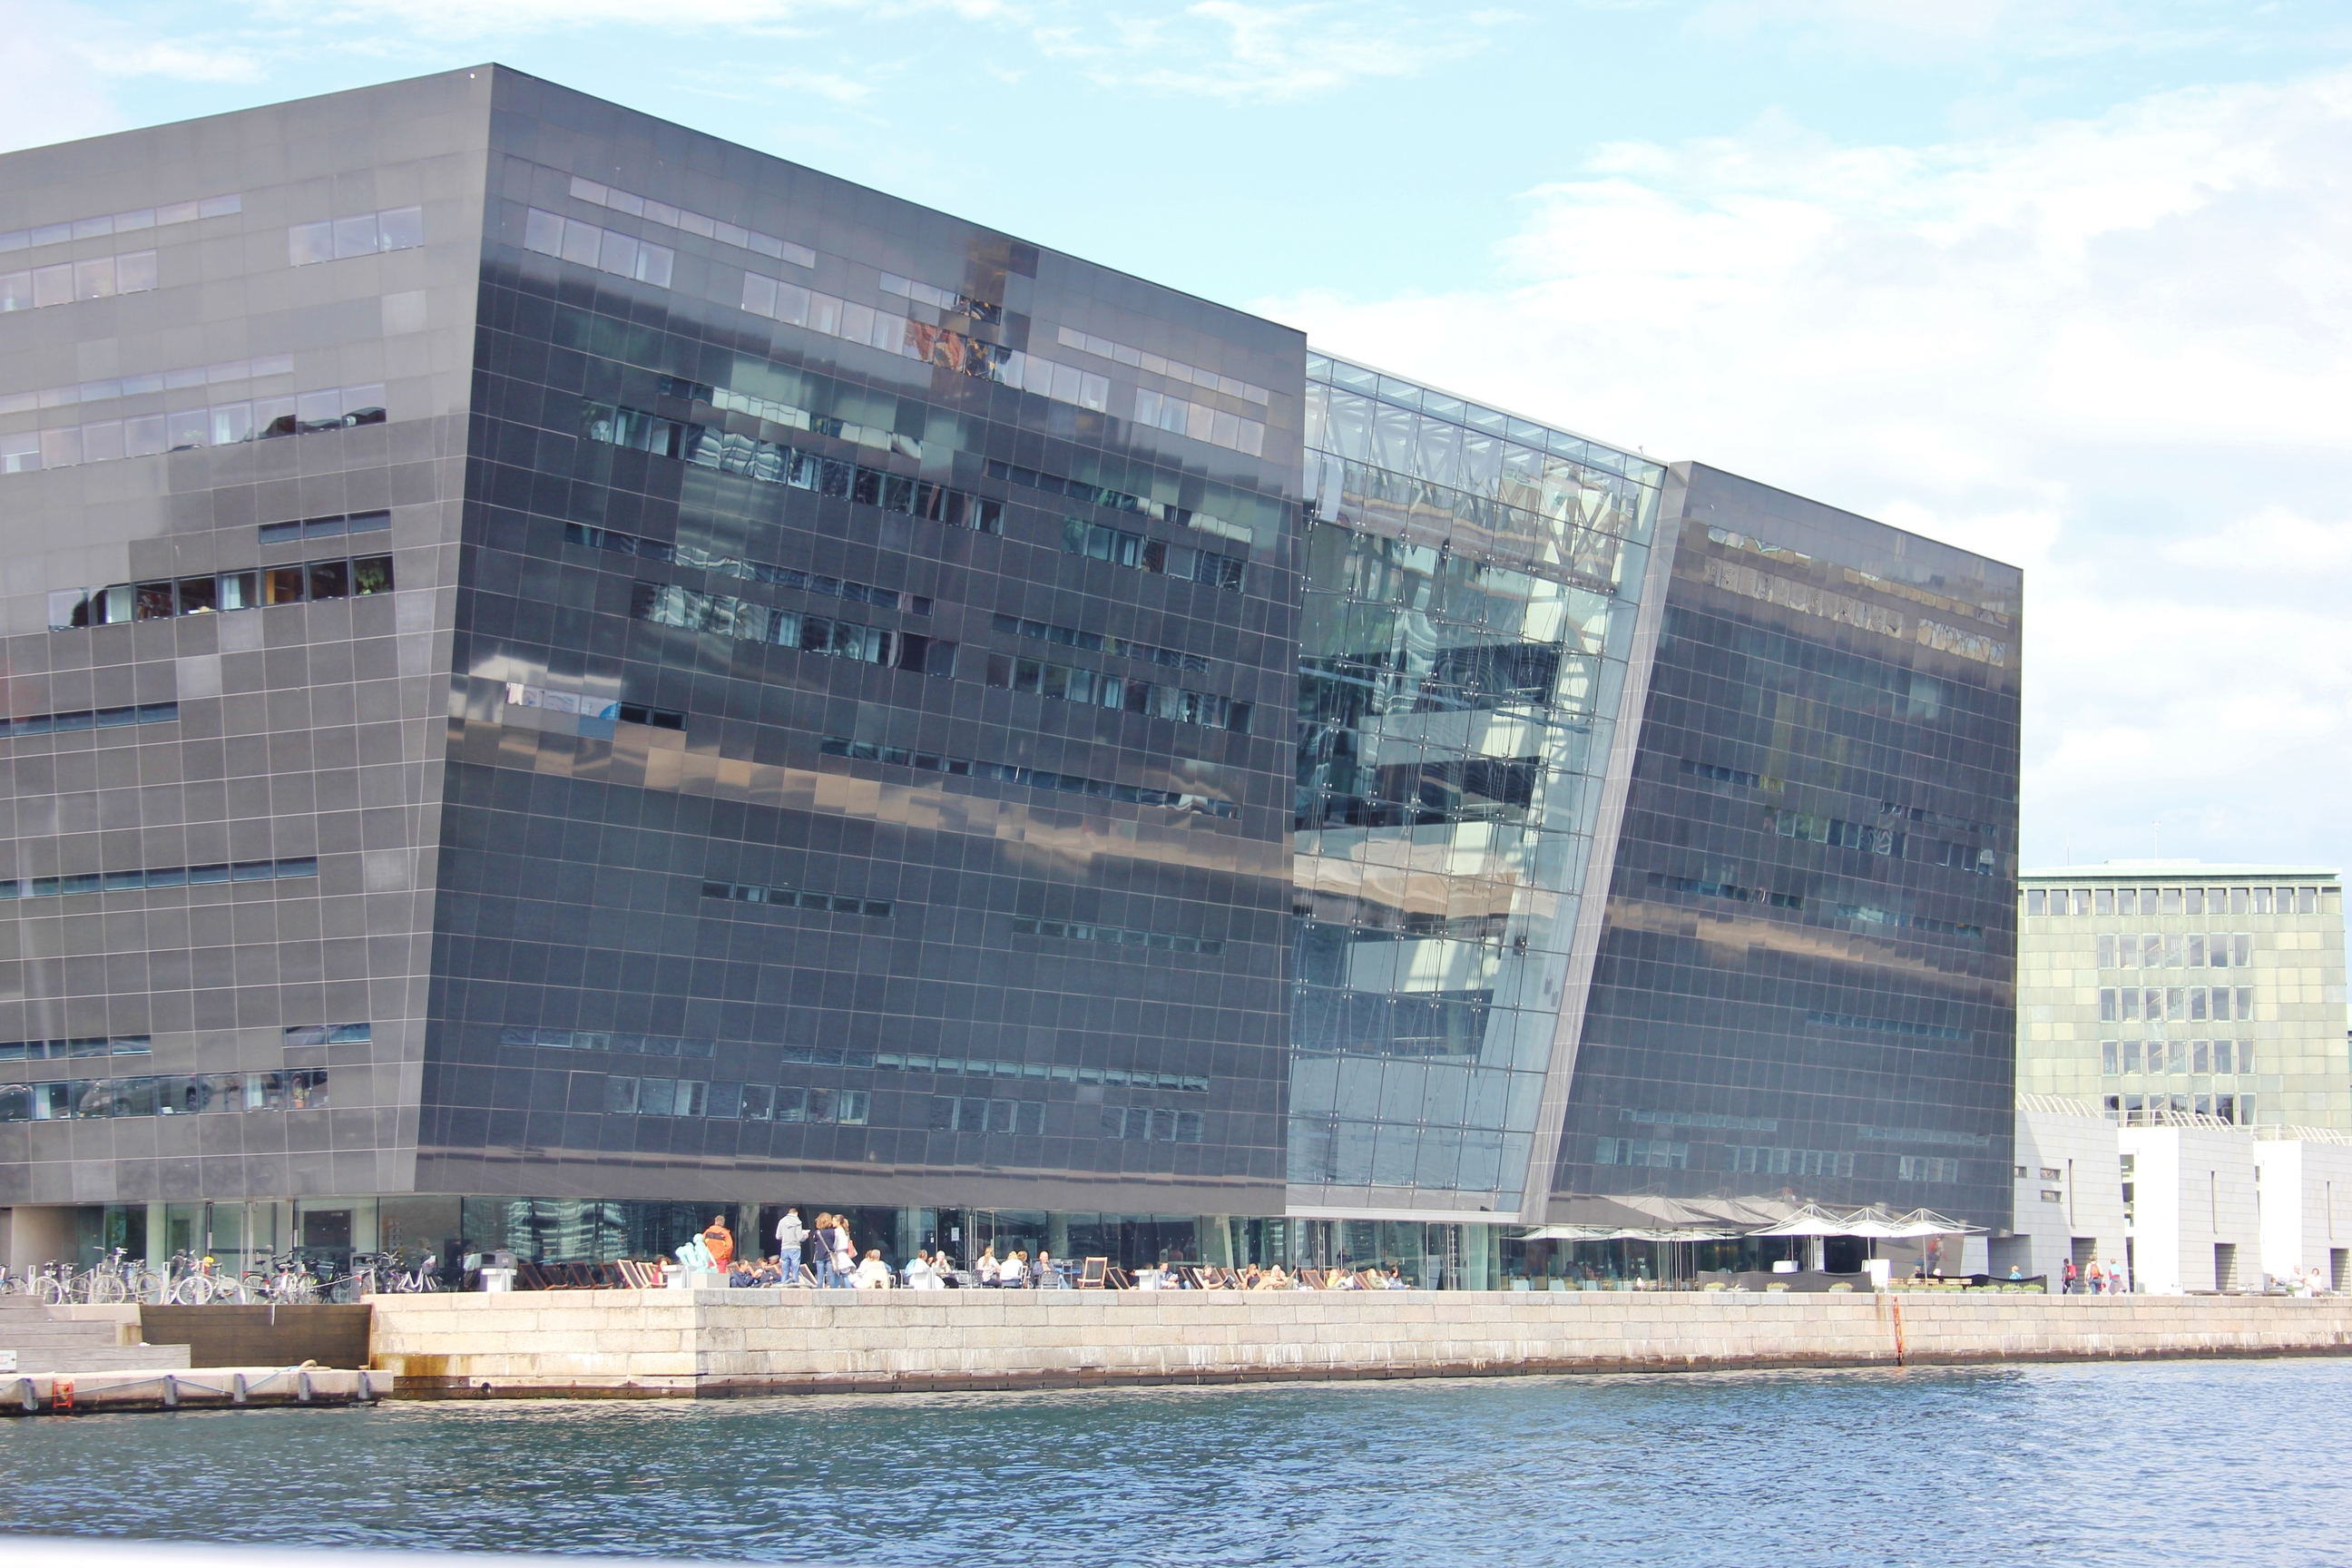 The Black Diamond Library in Copenhagen